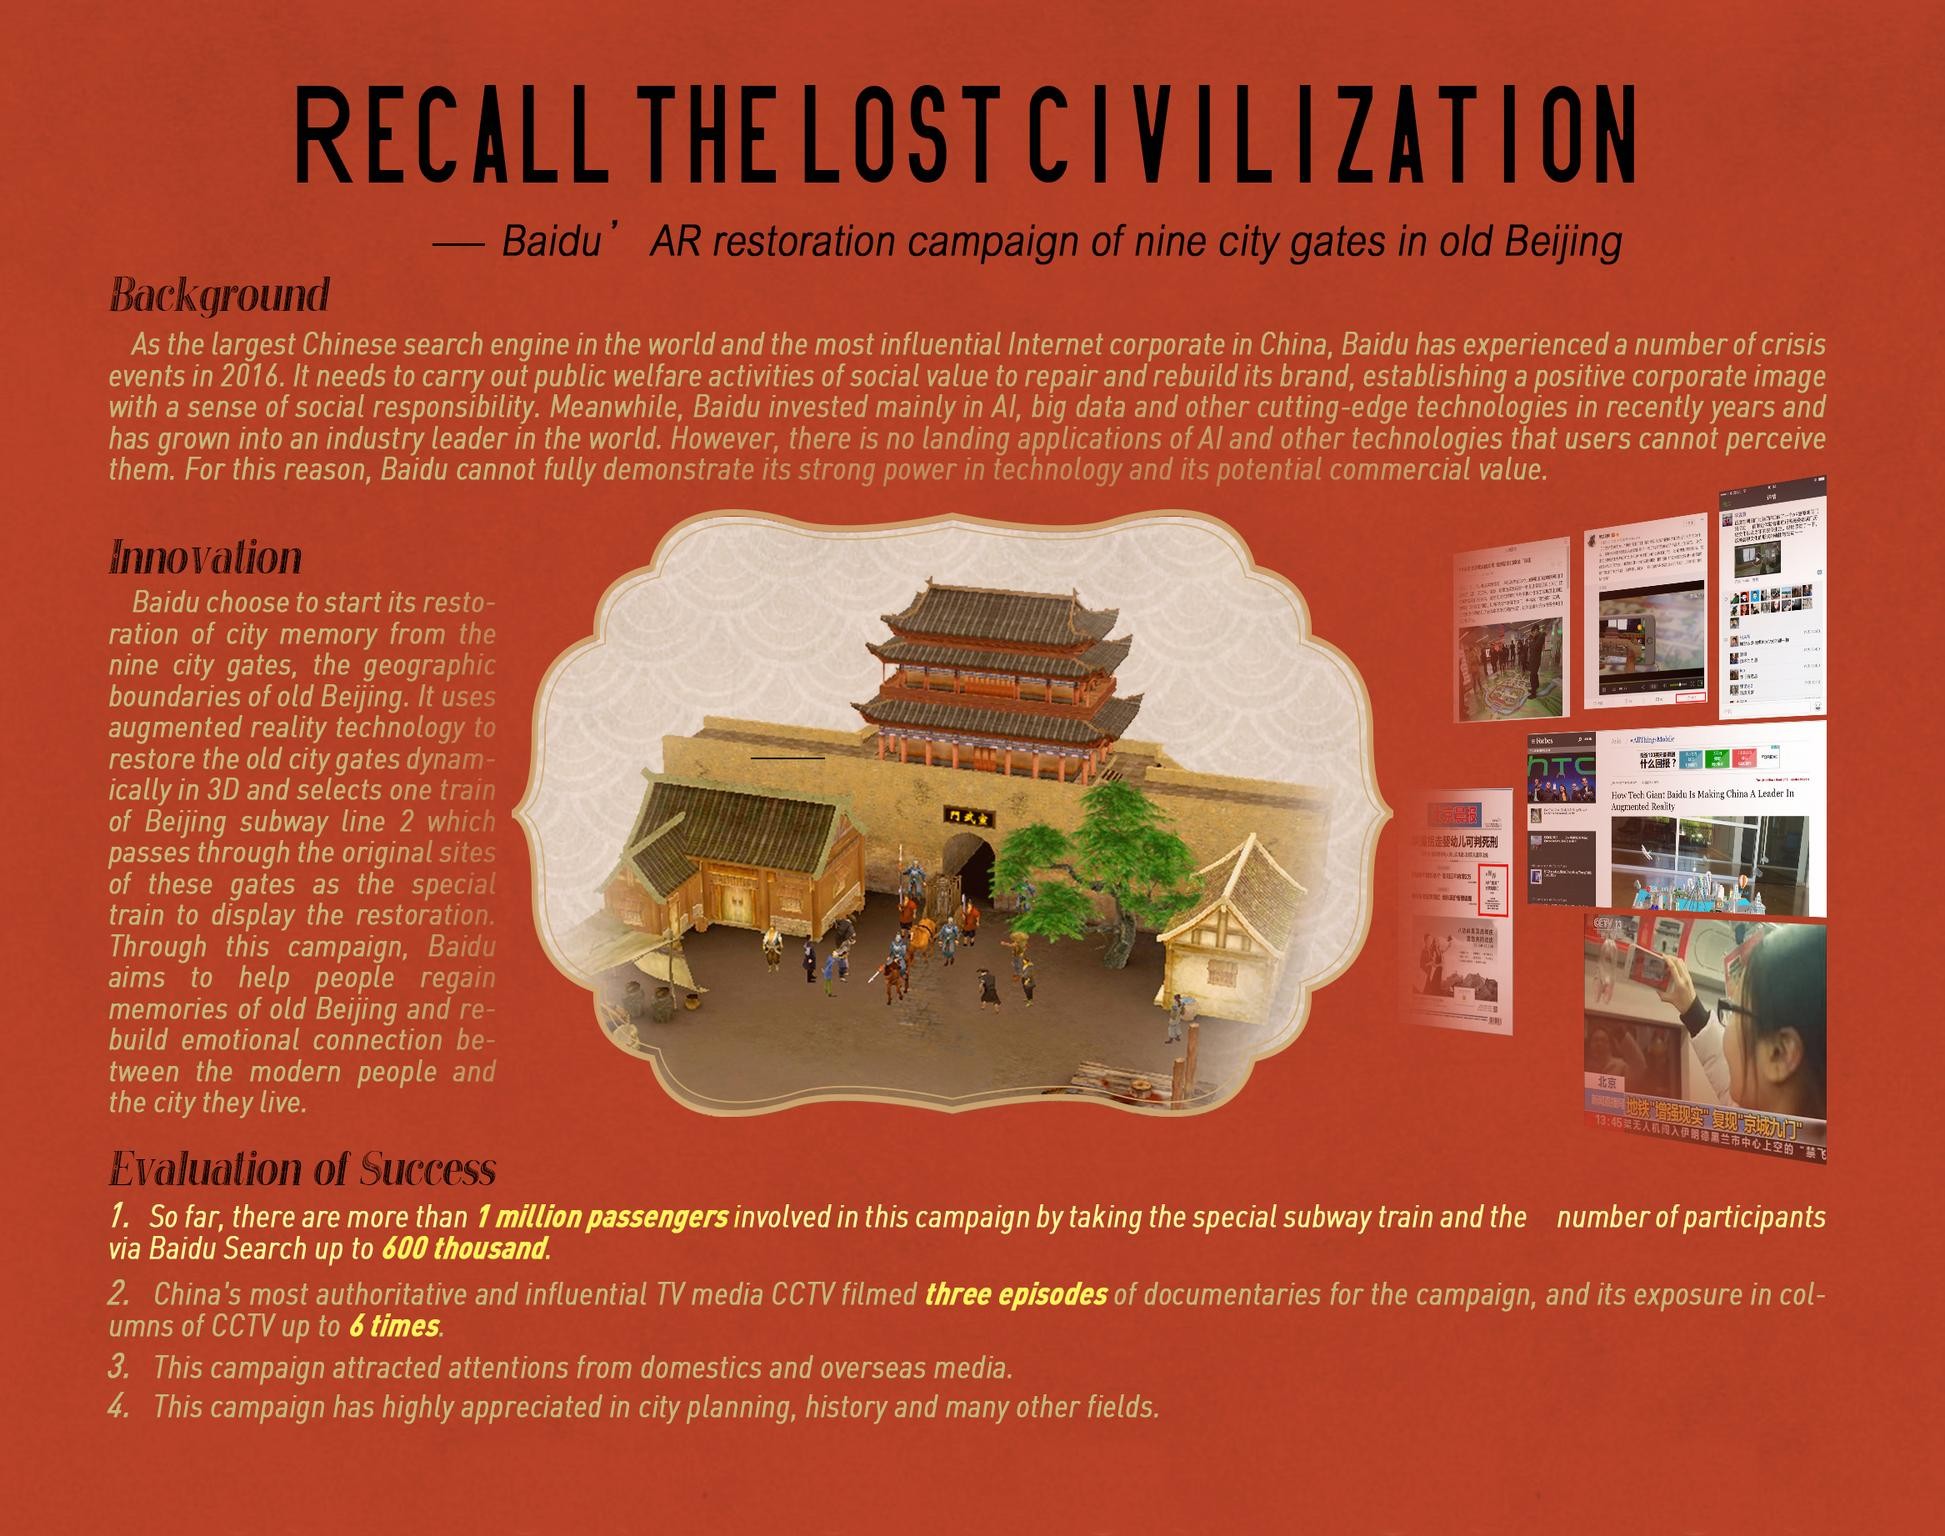 Baidu’ AR restoration campaign of nine city gates in old Beijing